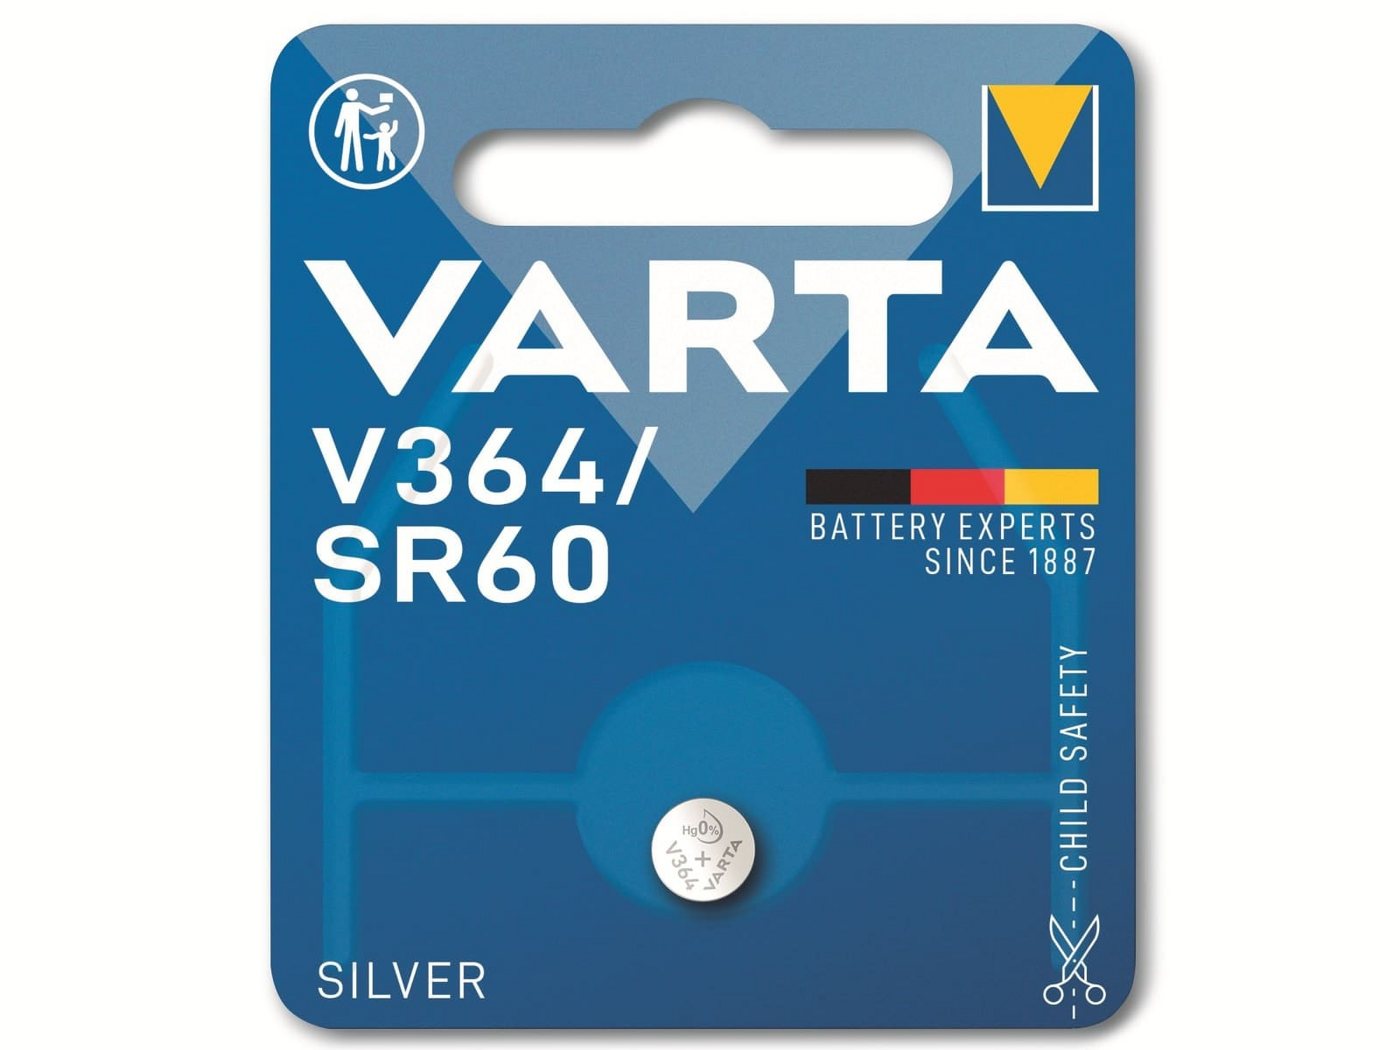 VARTA VARTA Knopfzelle Silver Oxide, 364 SR60, 1.55V, 1 Knopfzelle von VARTA